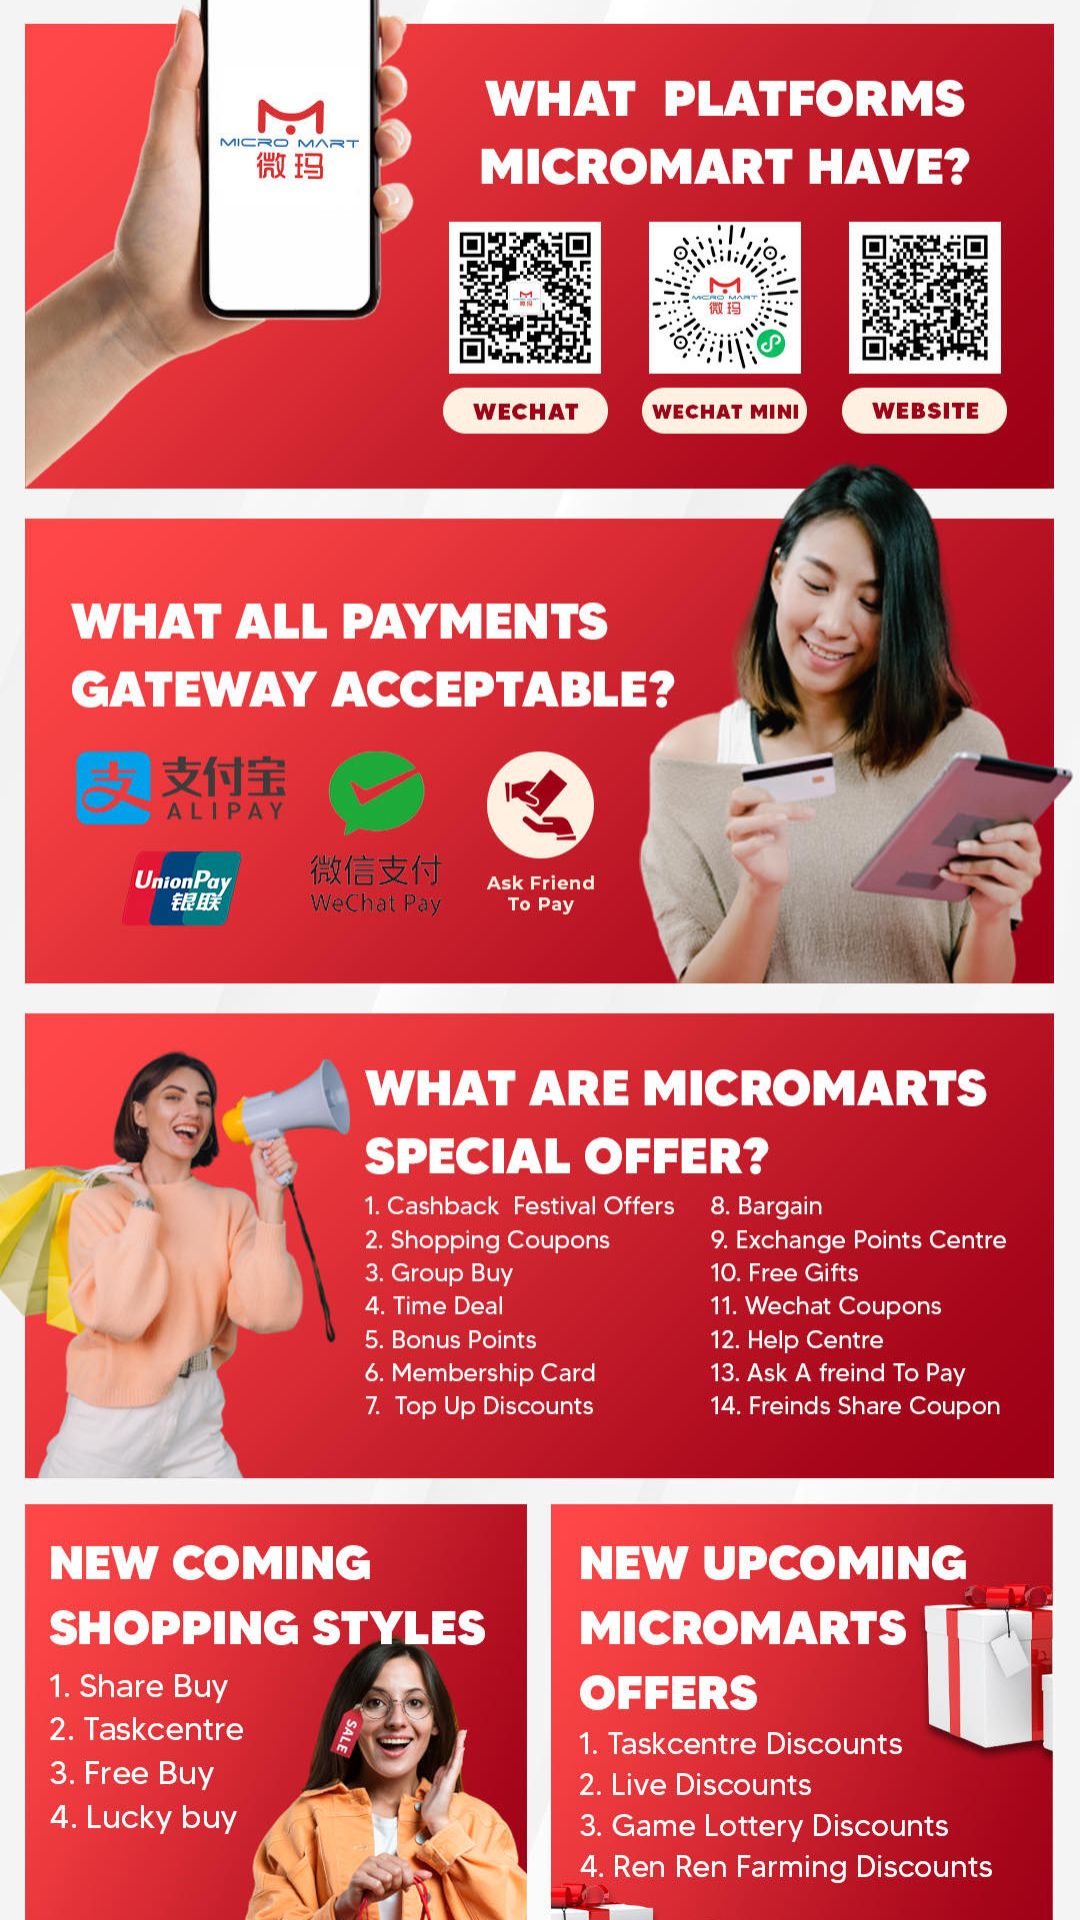 Micromart Marketing Plan (4).jpg